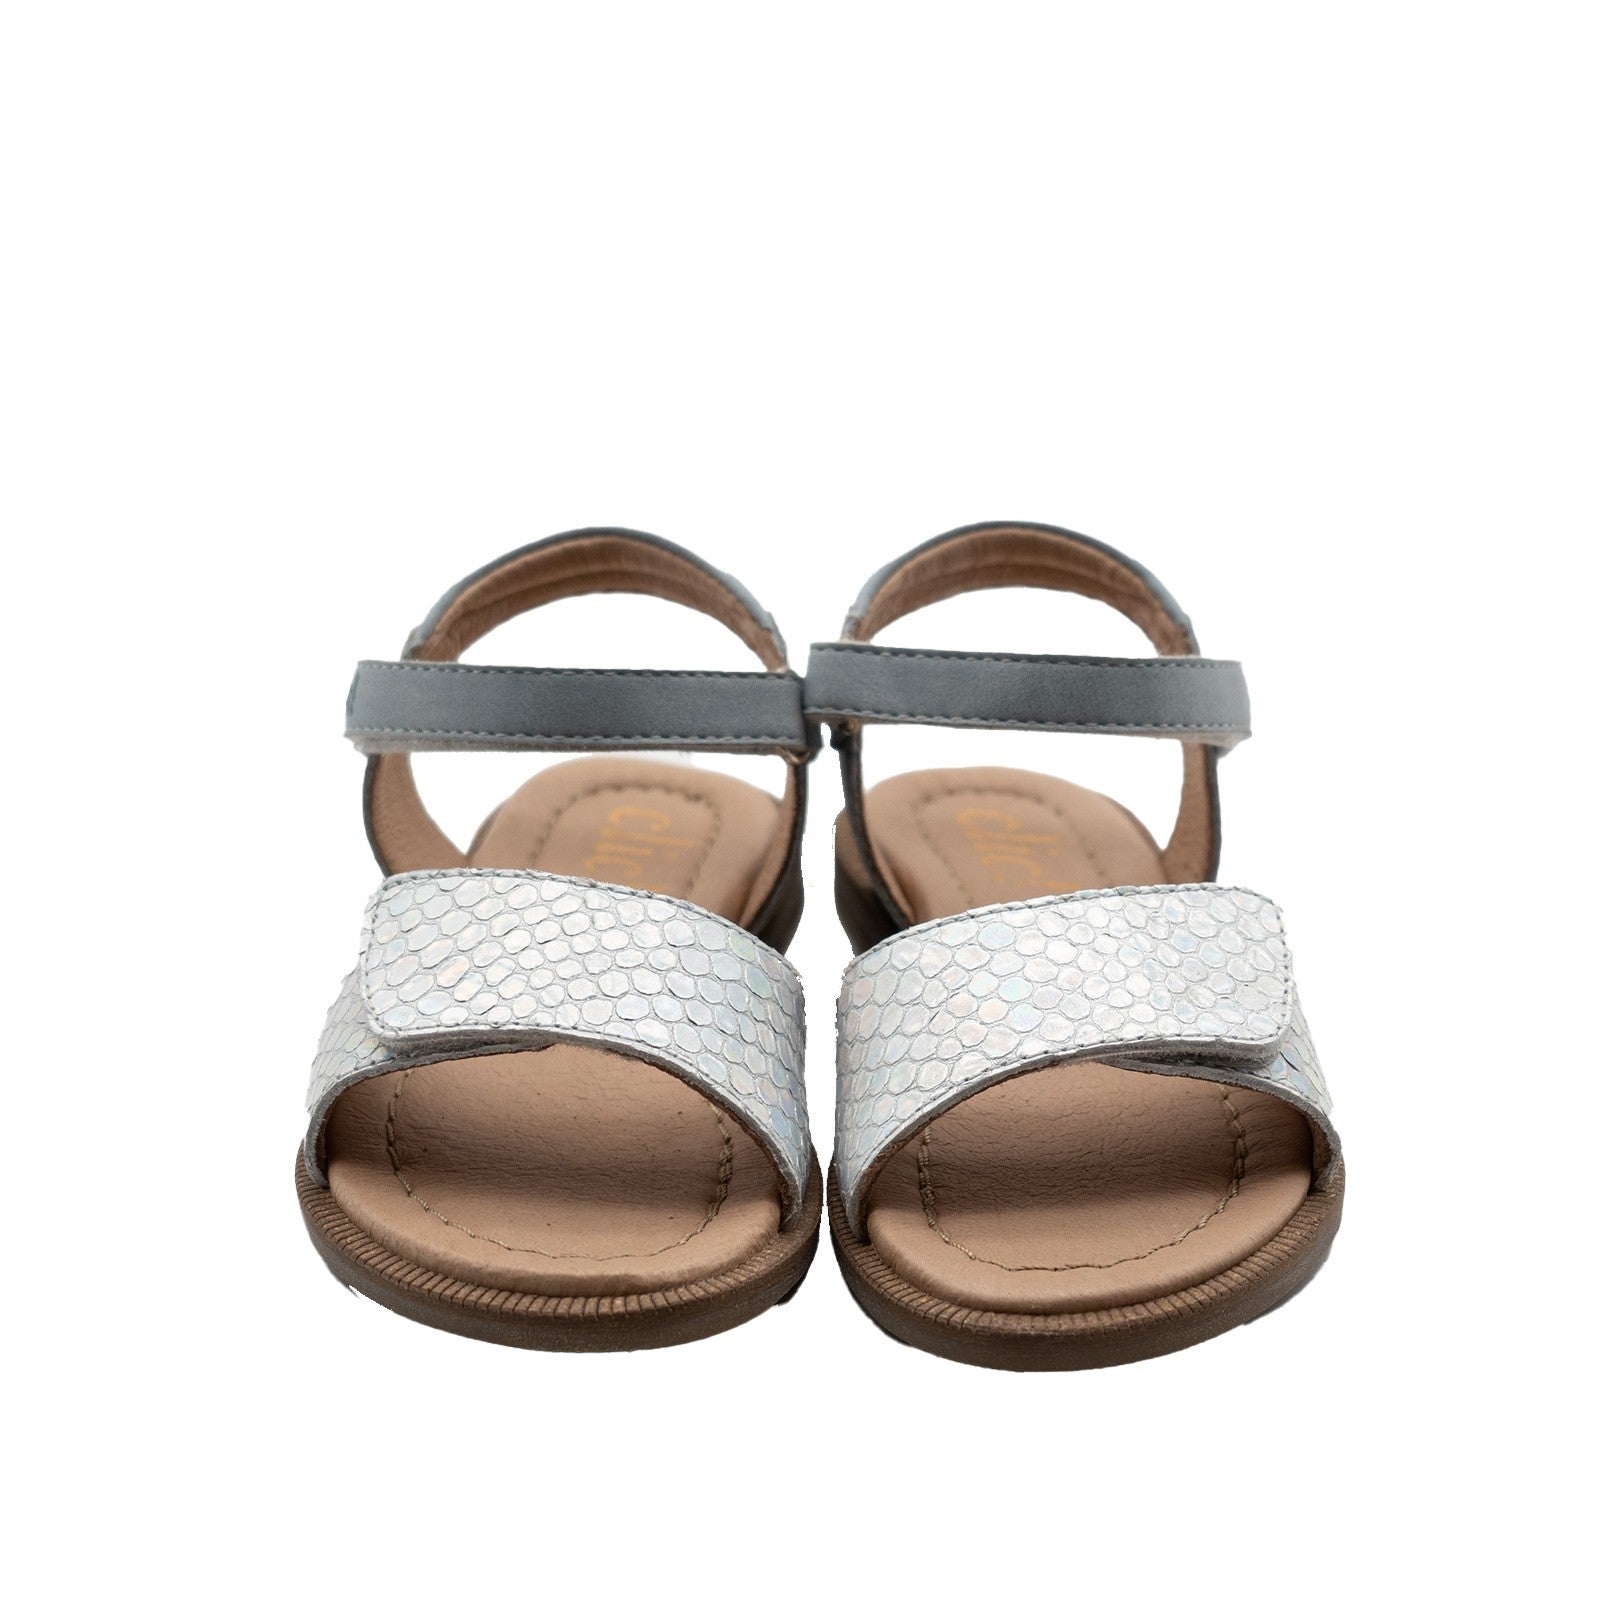 Clic! Sandale in hellblau|silber